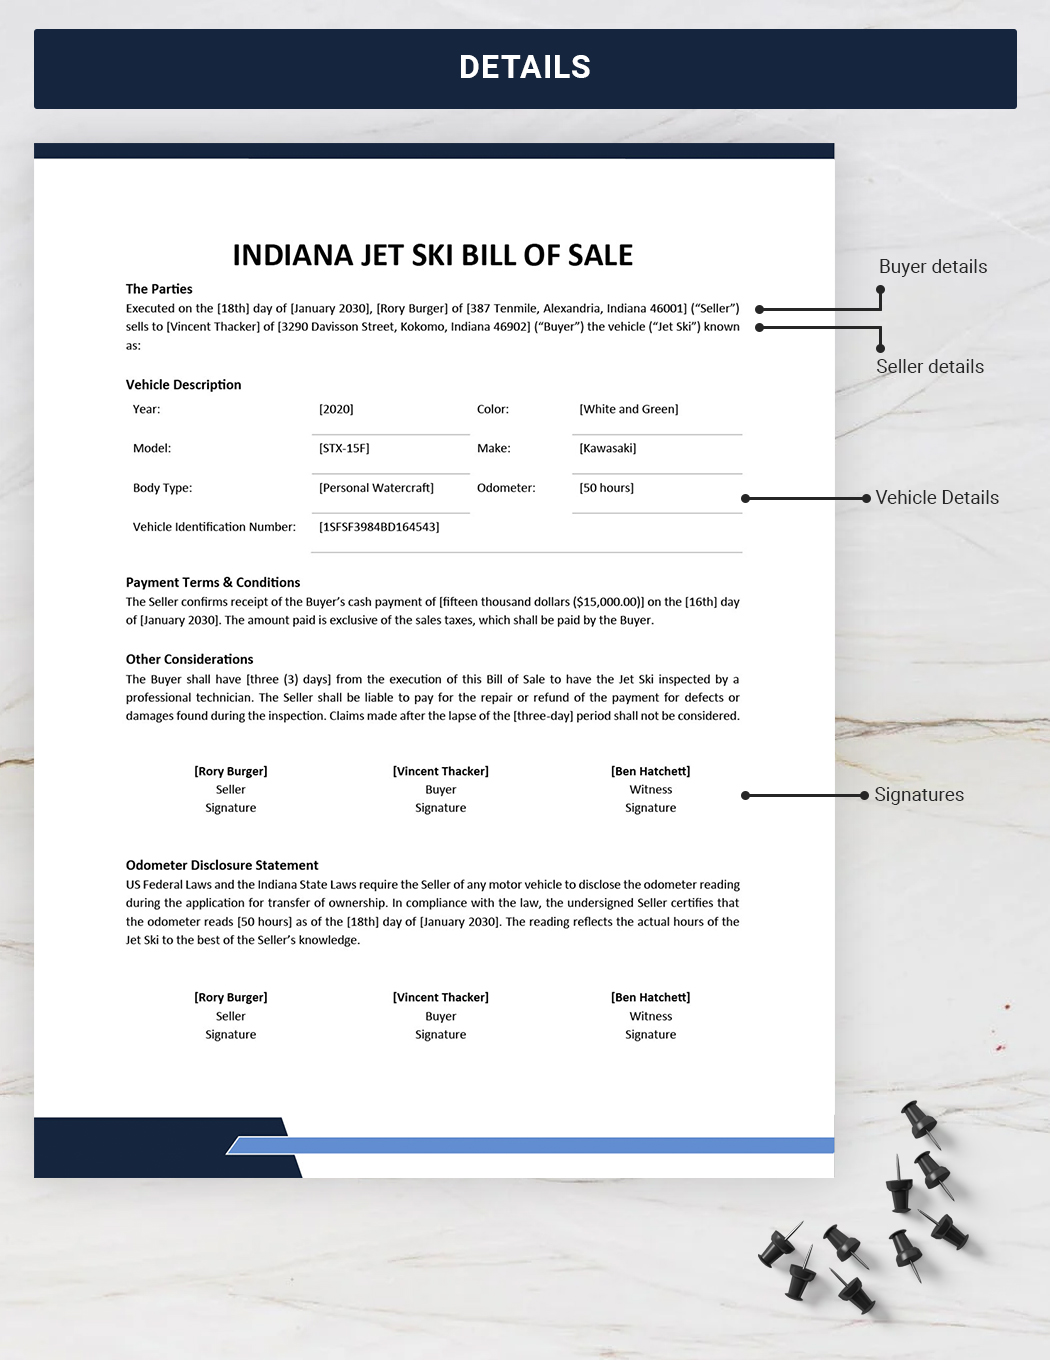 Indiana Jet Ski Bill of Sale Template